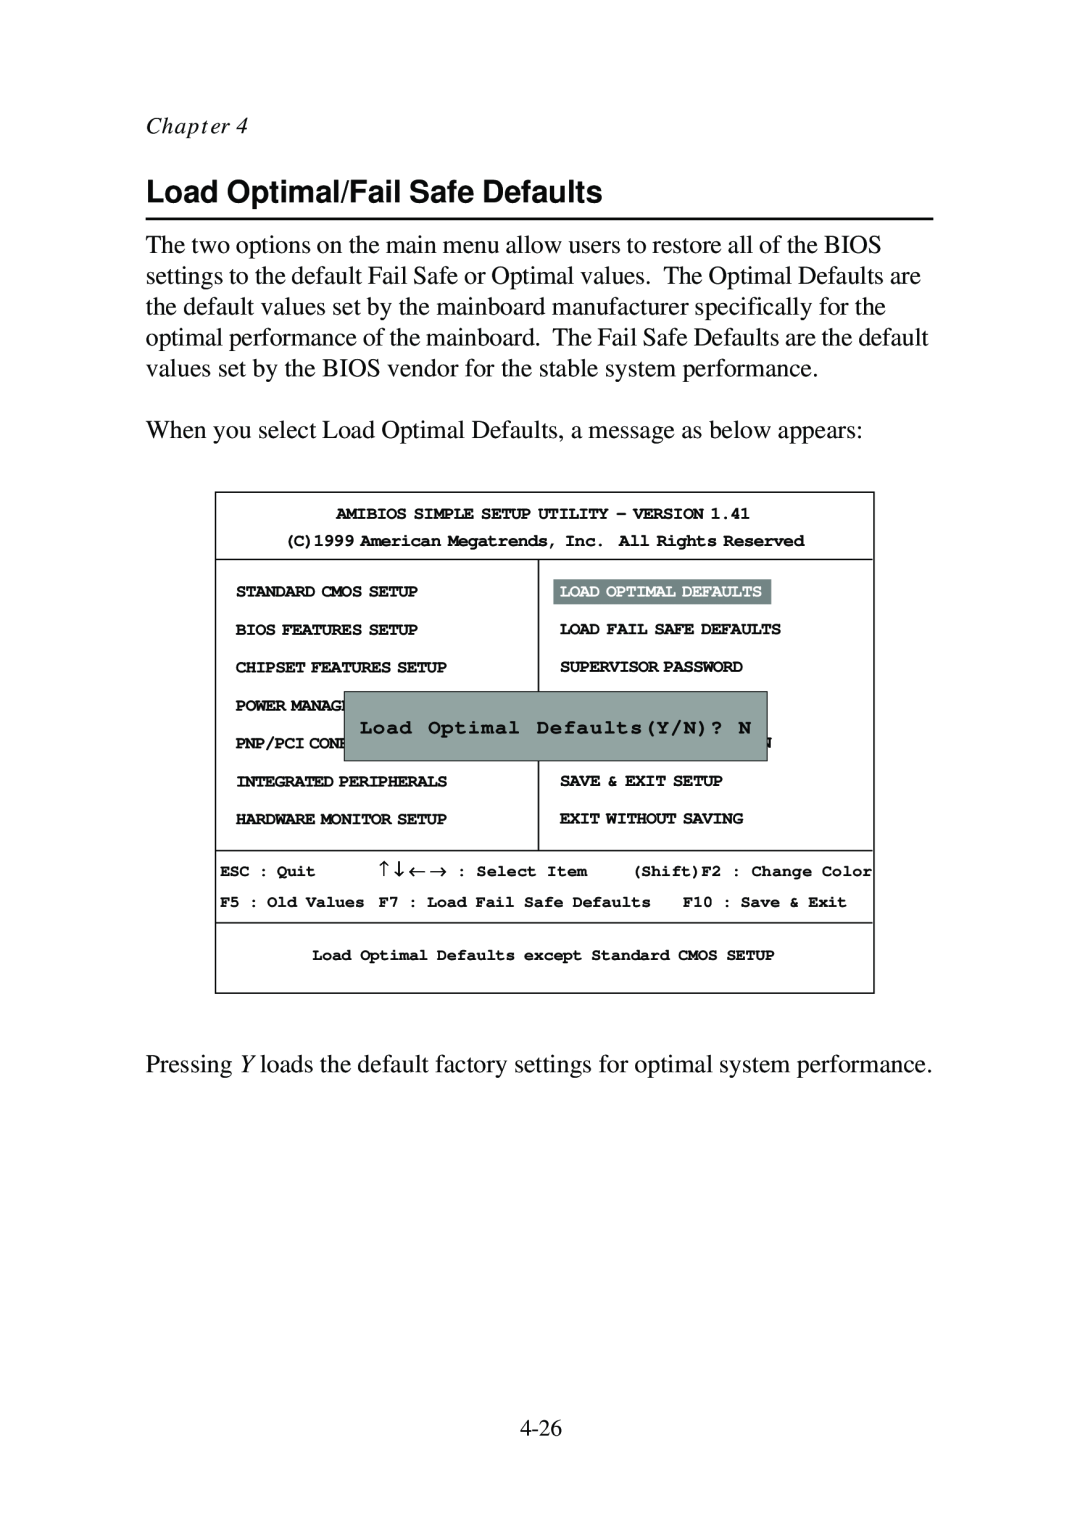 Premio Computer Aries/Centella manual Load Optimal/Fail Safe Defaults, DefaultsY/N? N 